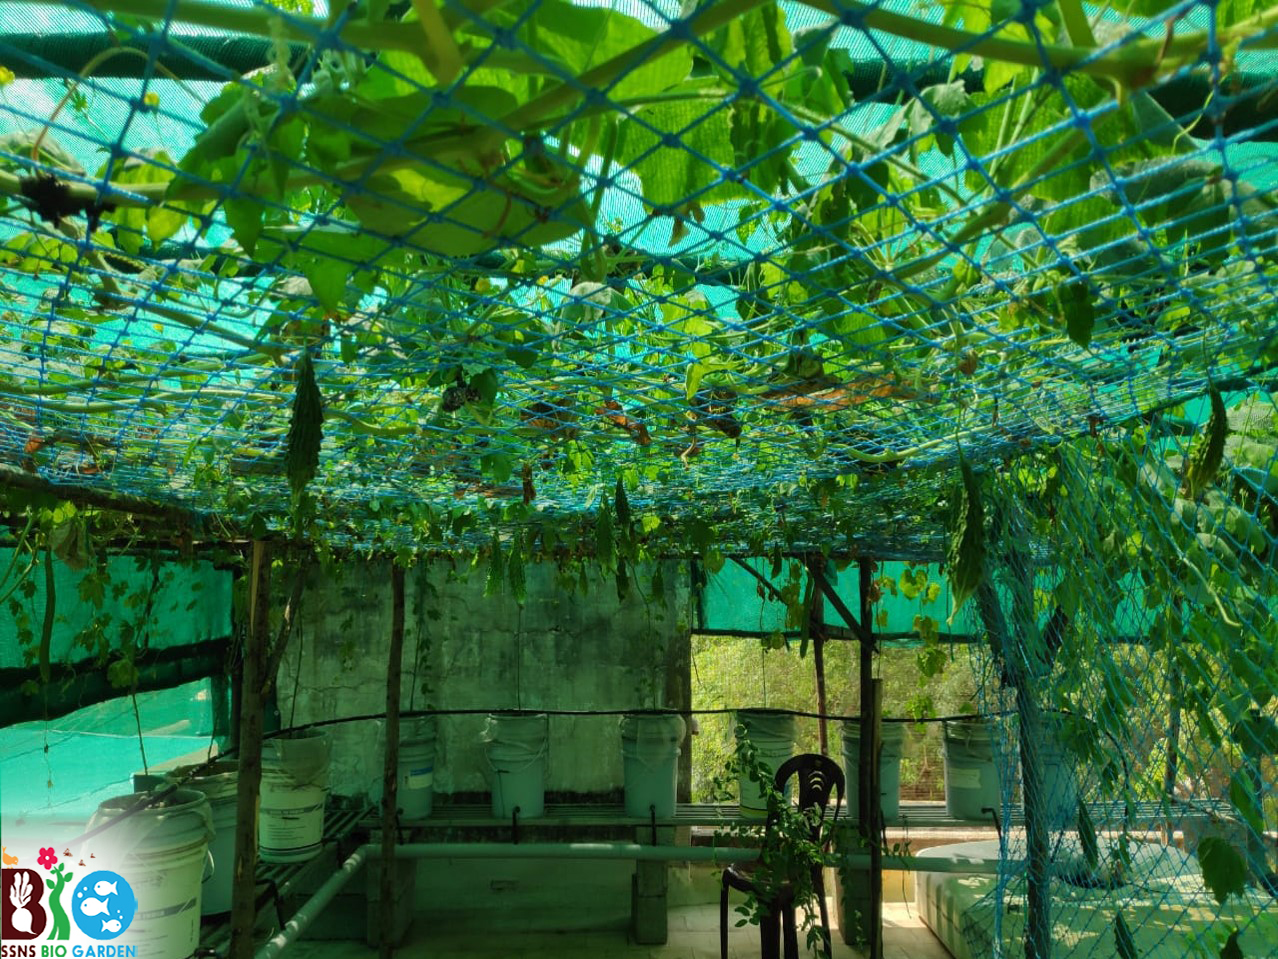 Hydroponicaly bio garden in Coimbatore